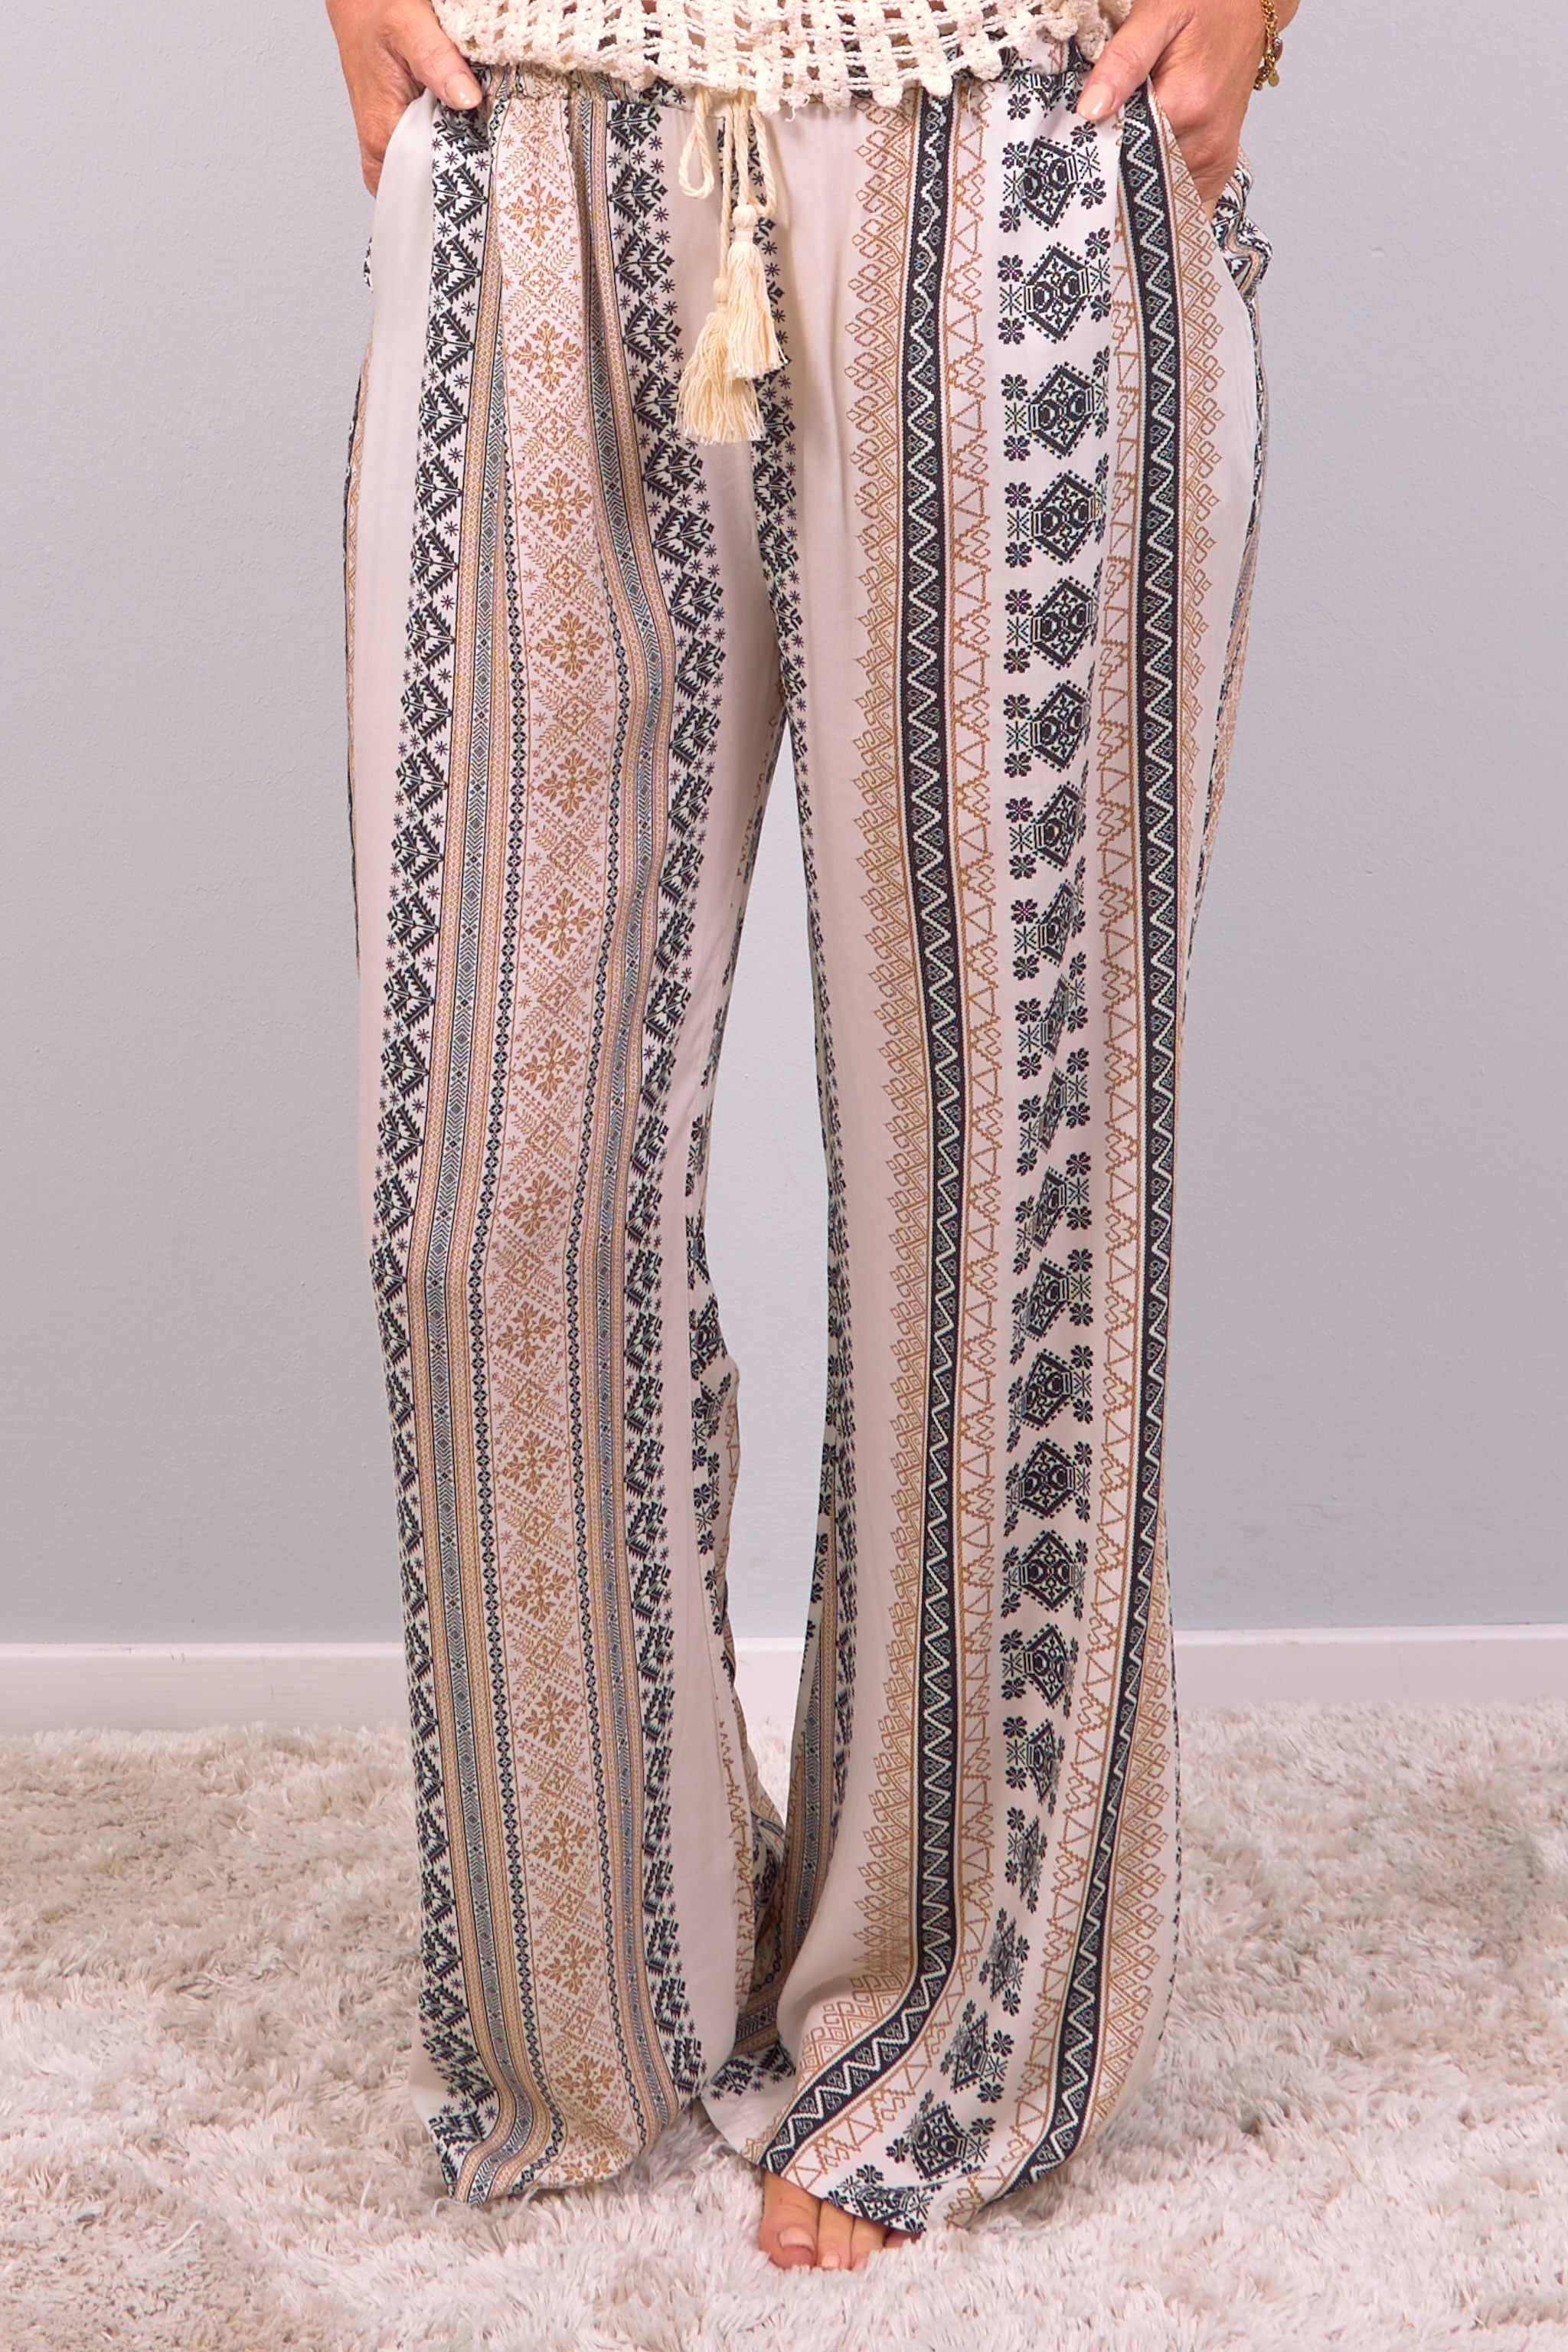 Pants with longitudinal print, beige-camel-black